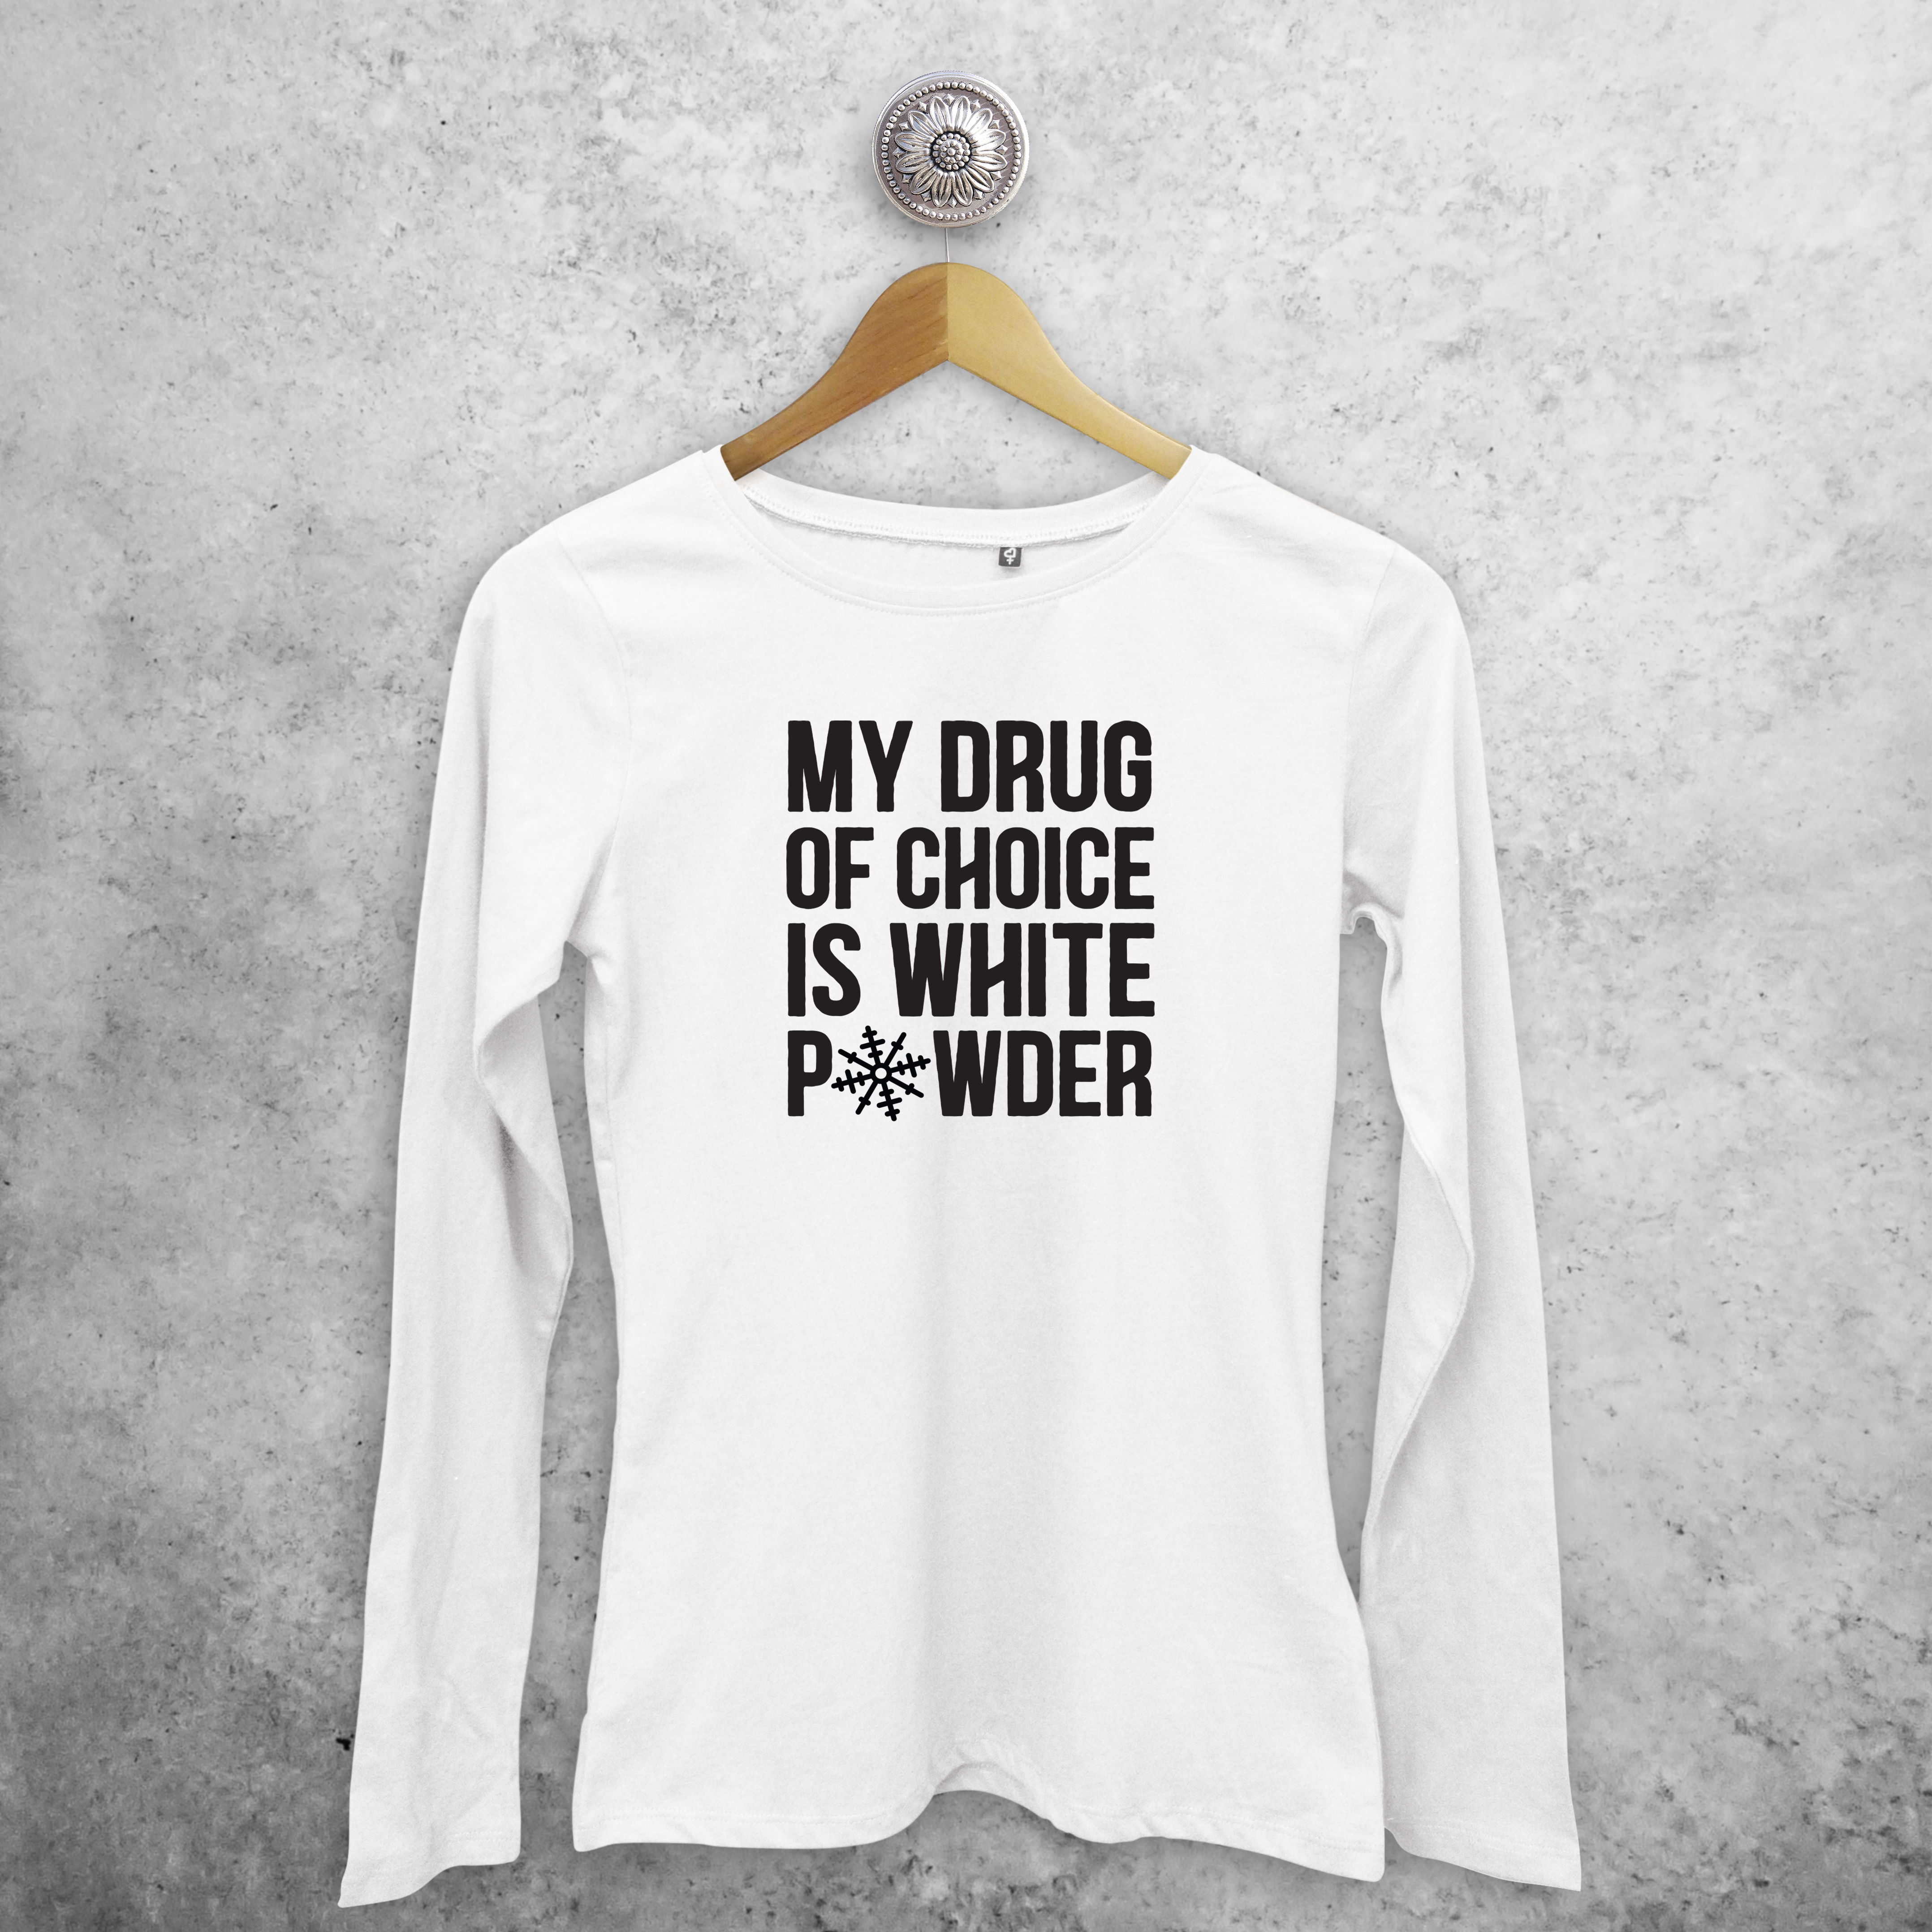 'My drug of choice is white powder' volwassene shirt met lange mouwen